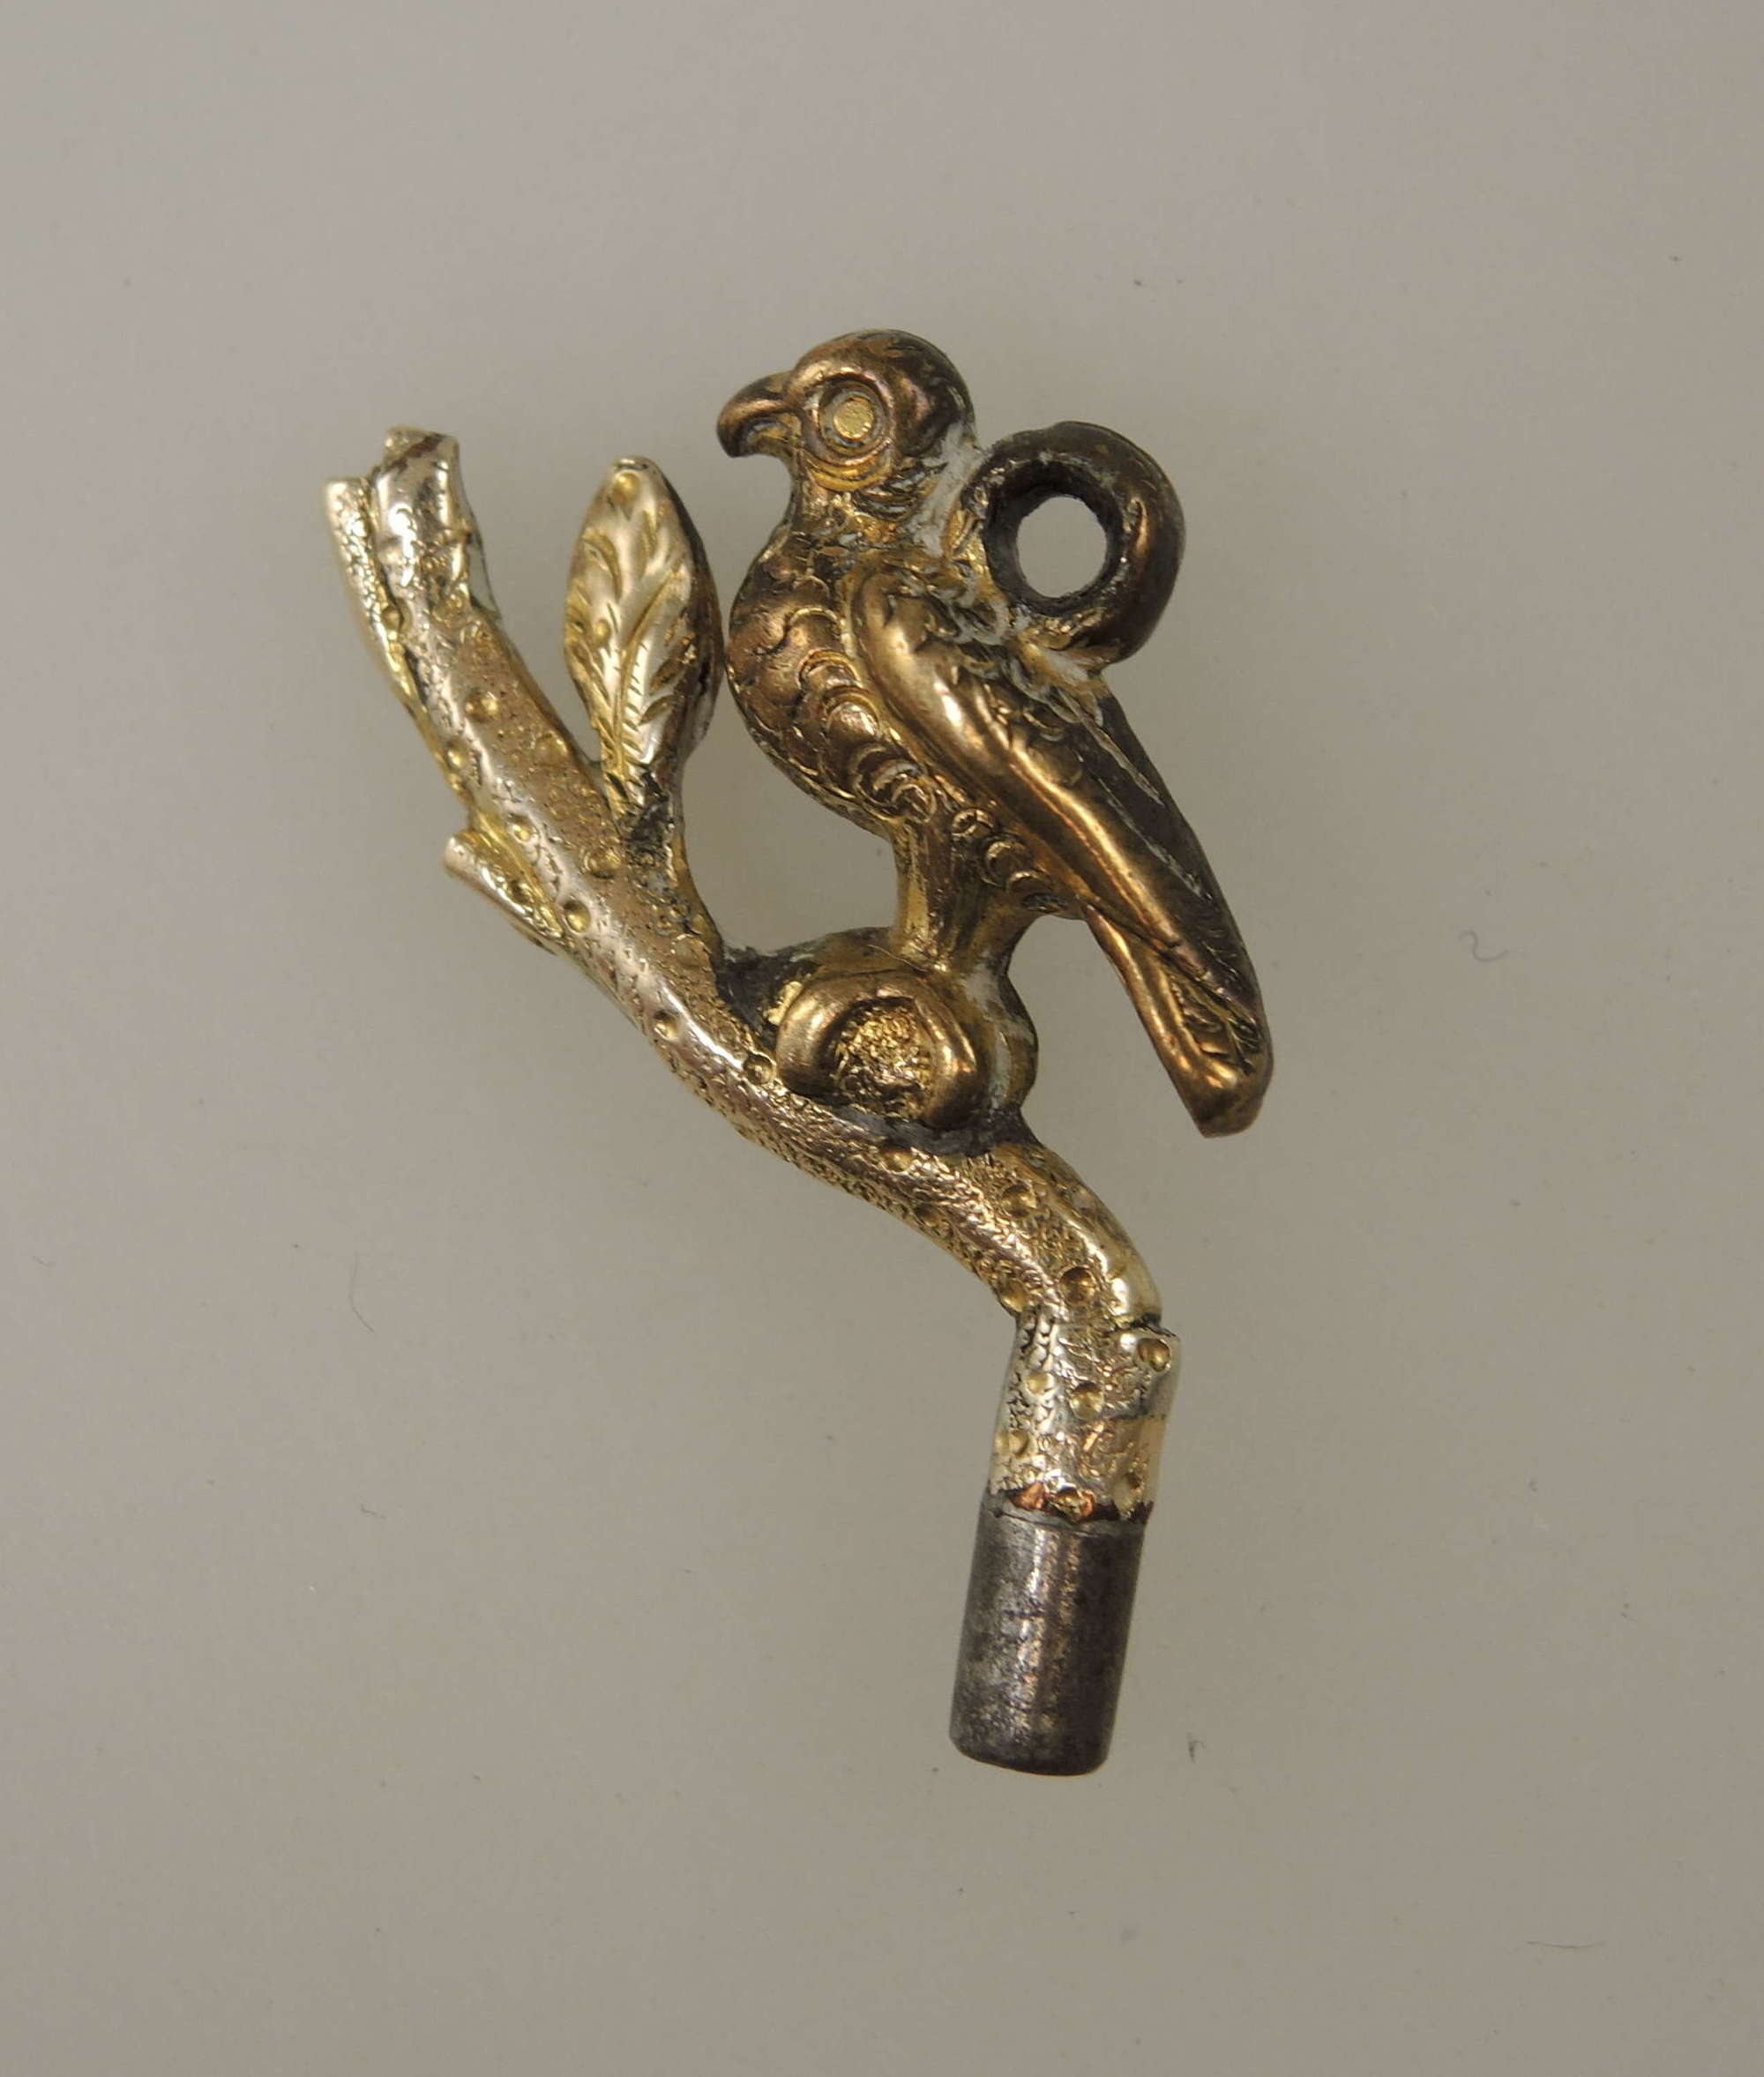 Solid gold BIRD on a branch Pocket watch key c1850